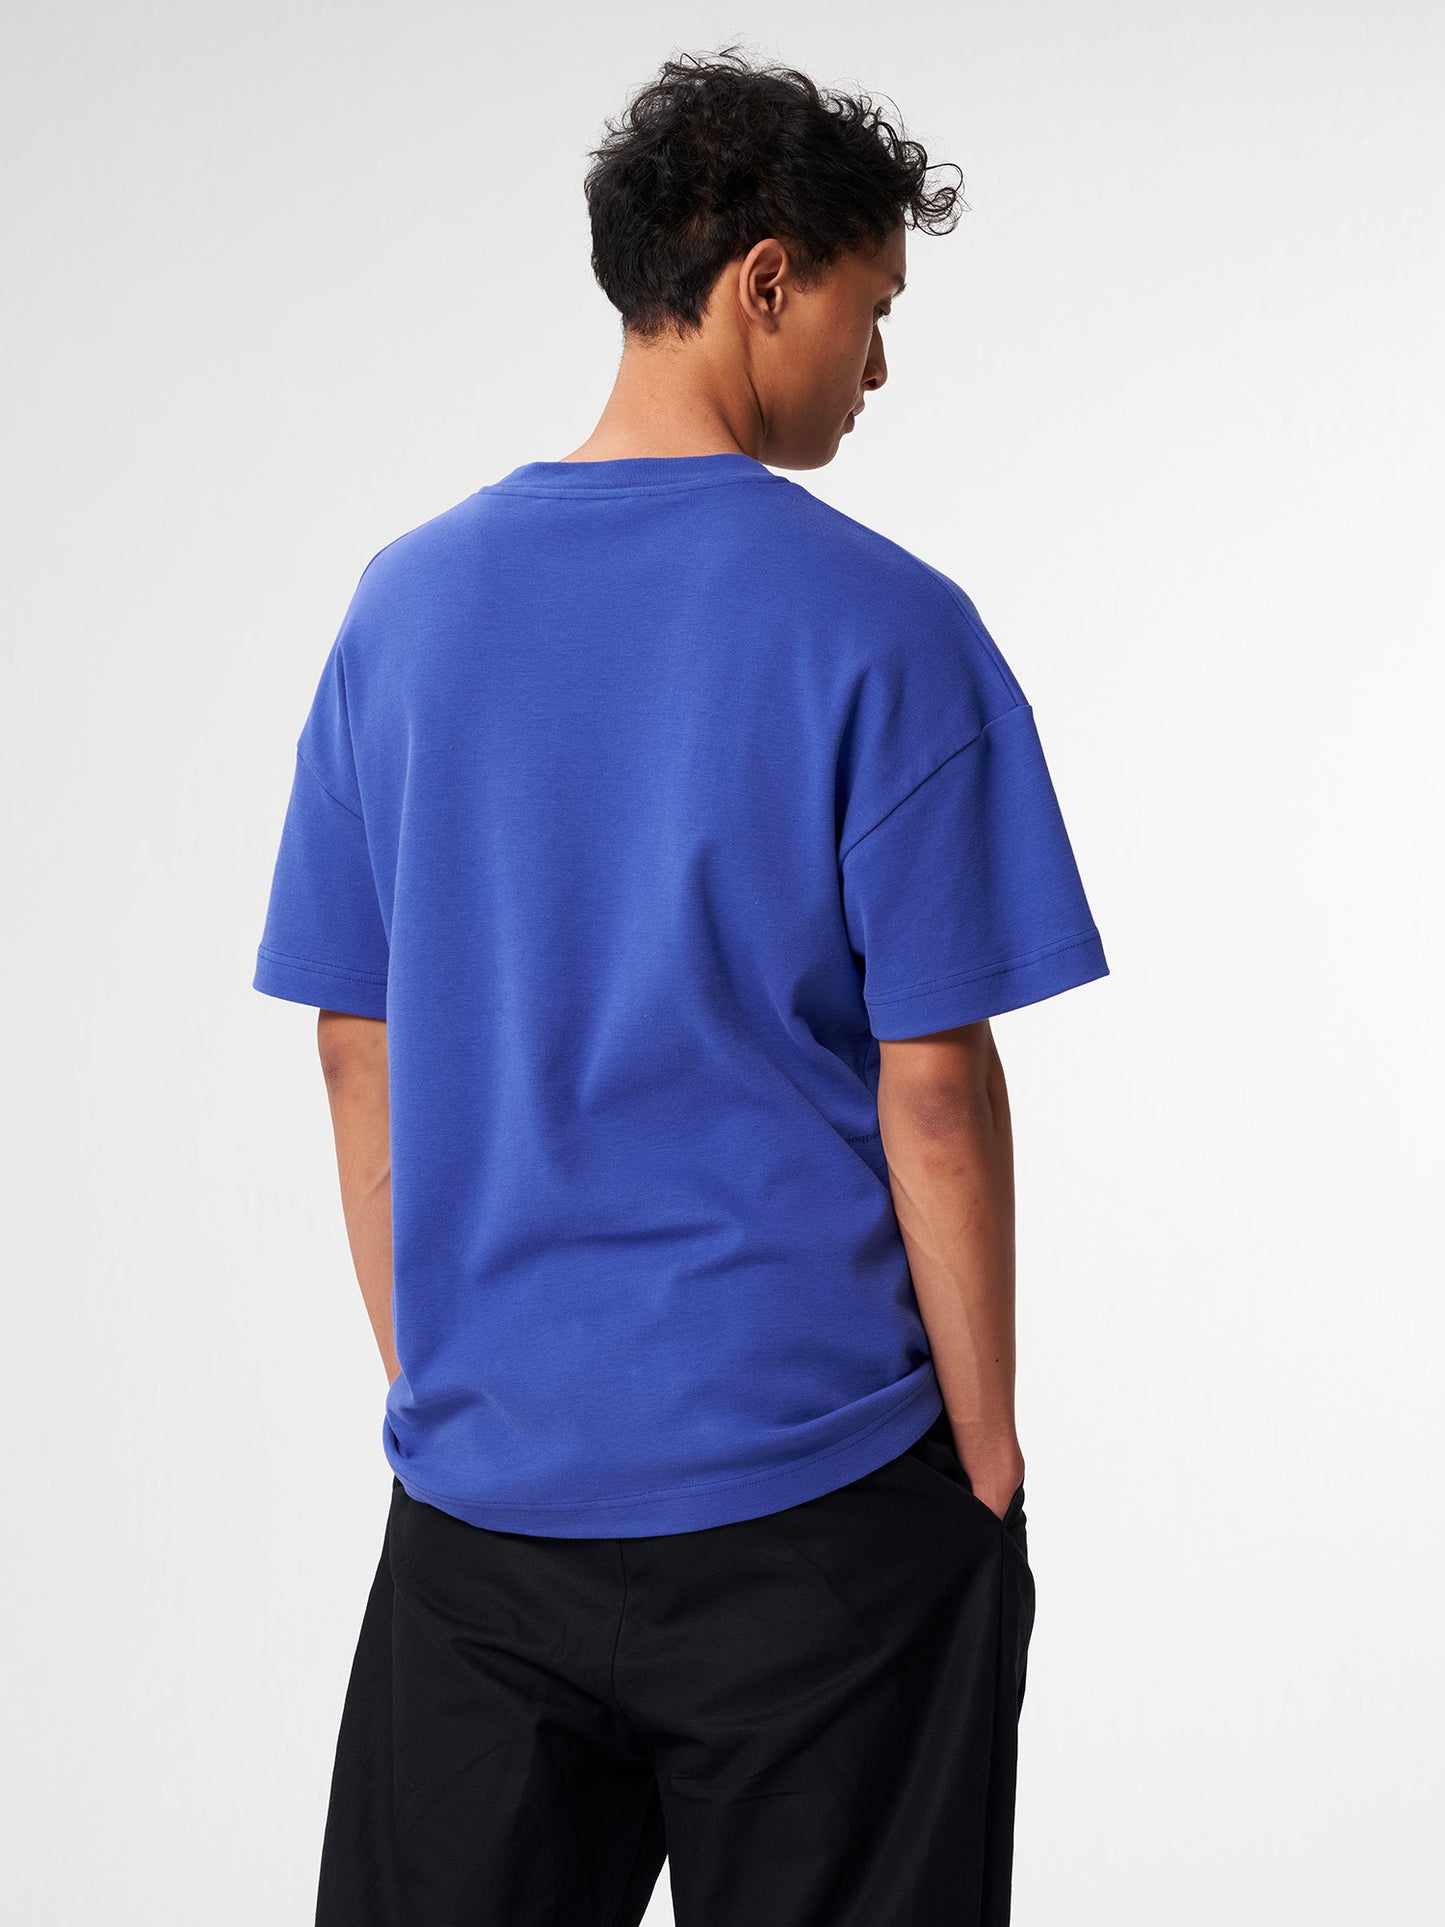 pinqponq-Tshirt-Unisex-Poppy-Blue-model-back